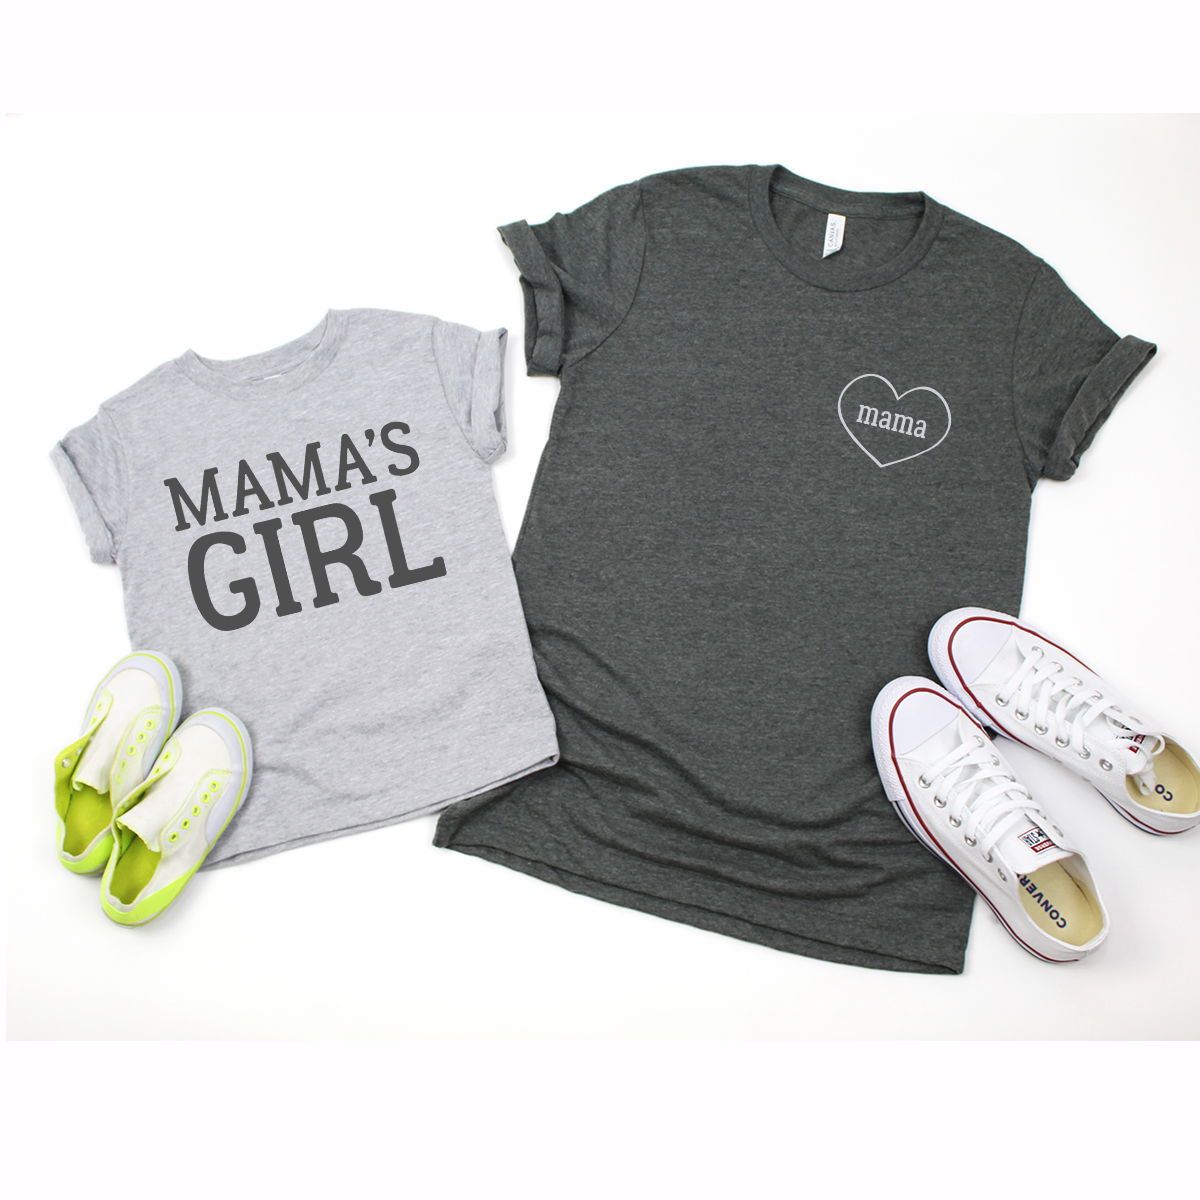 Mama Mama's Girl - Grey/Charcoal Twinning Set Mum & Daughter(s)